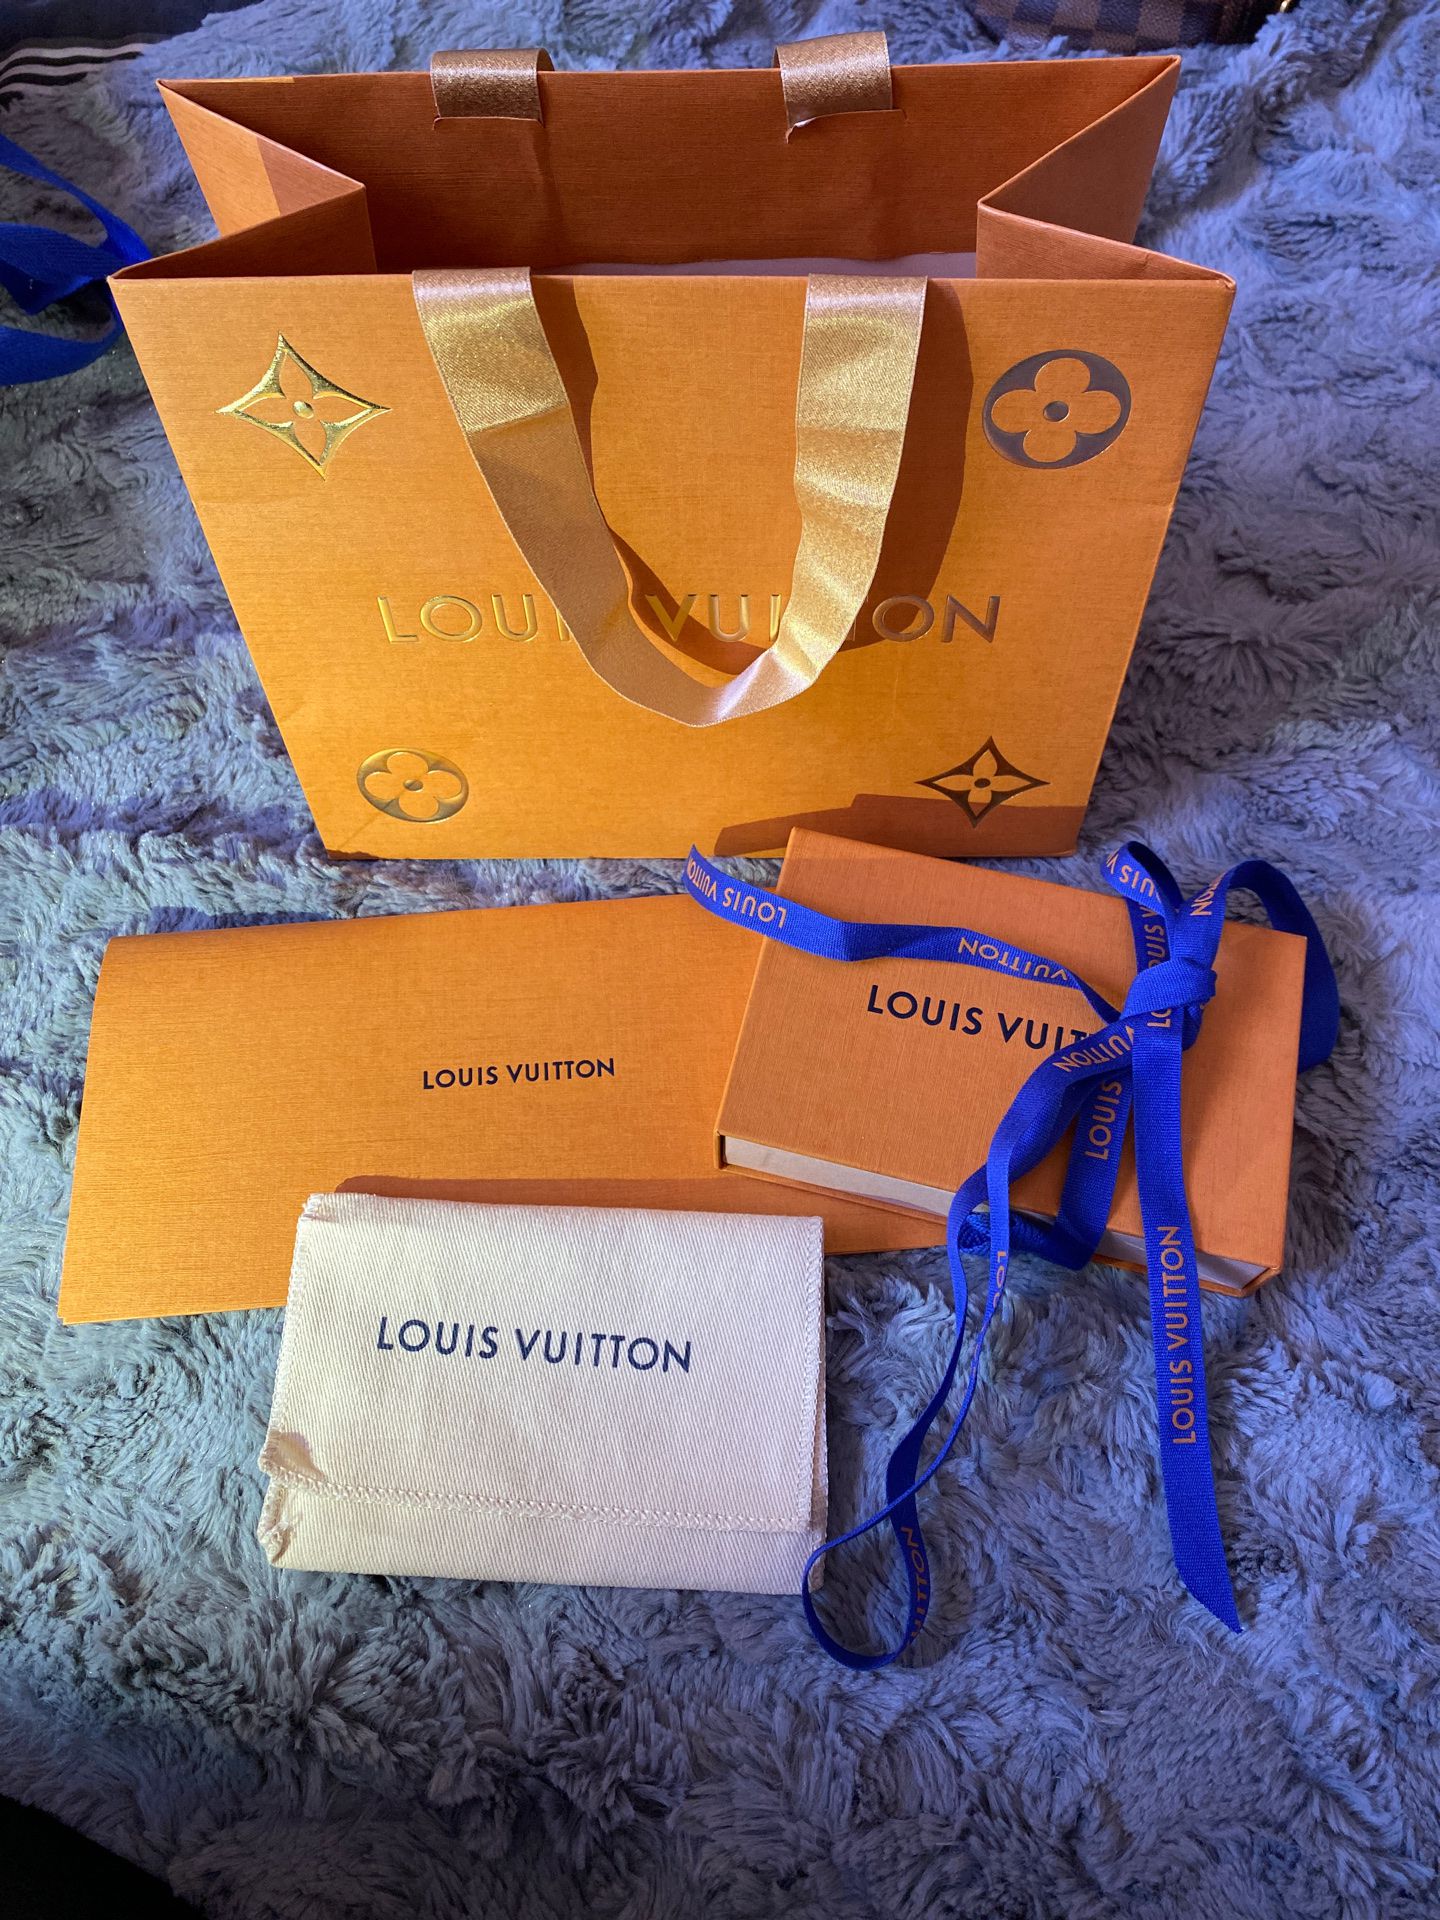 Authentic Louis Vuitton Small Box, Dust Bag, & Gift Bag